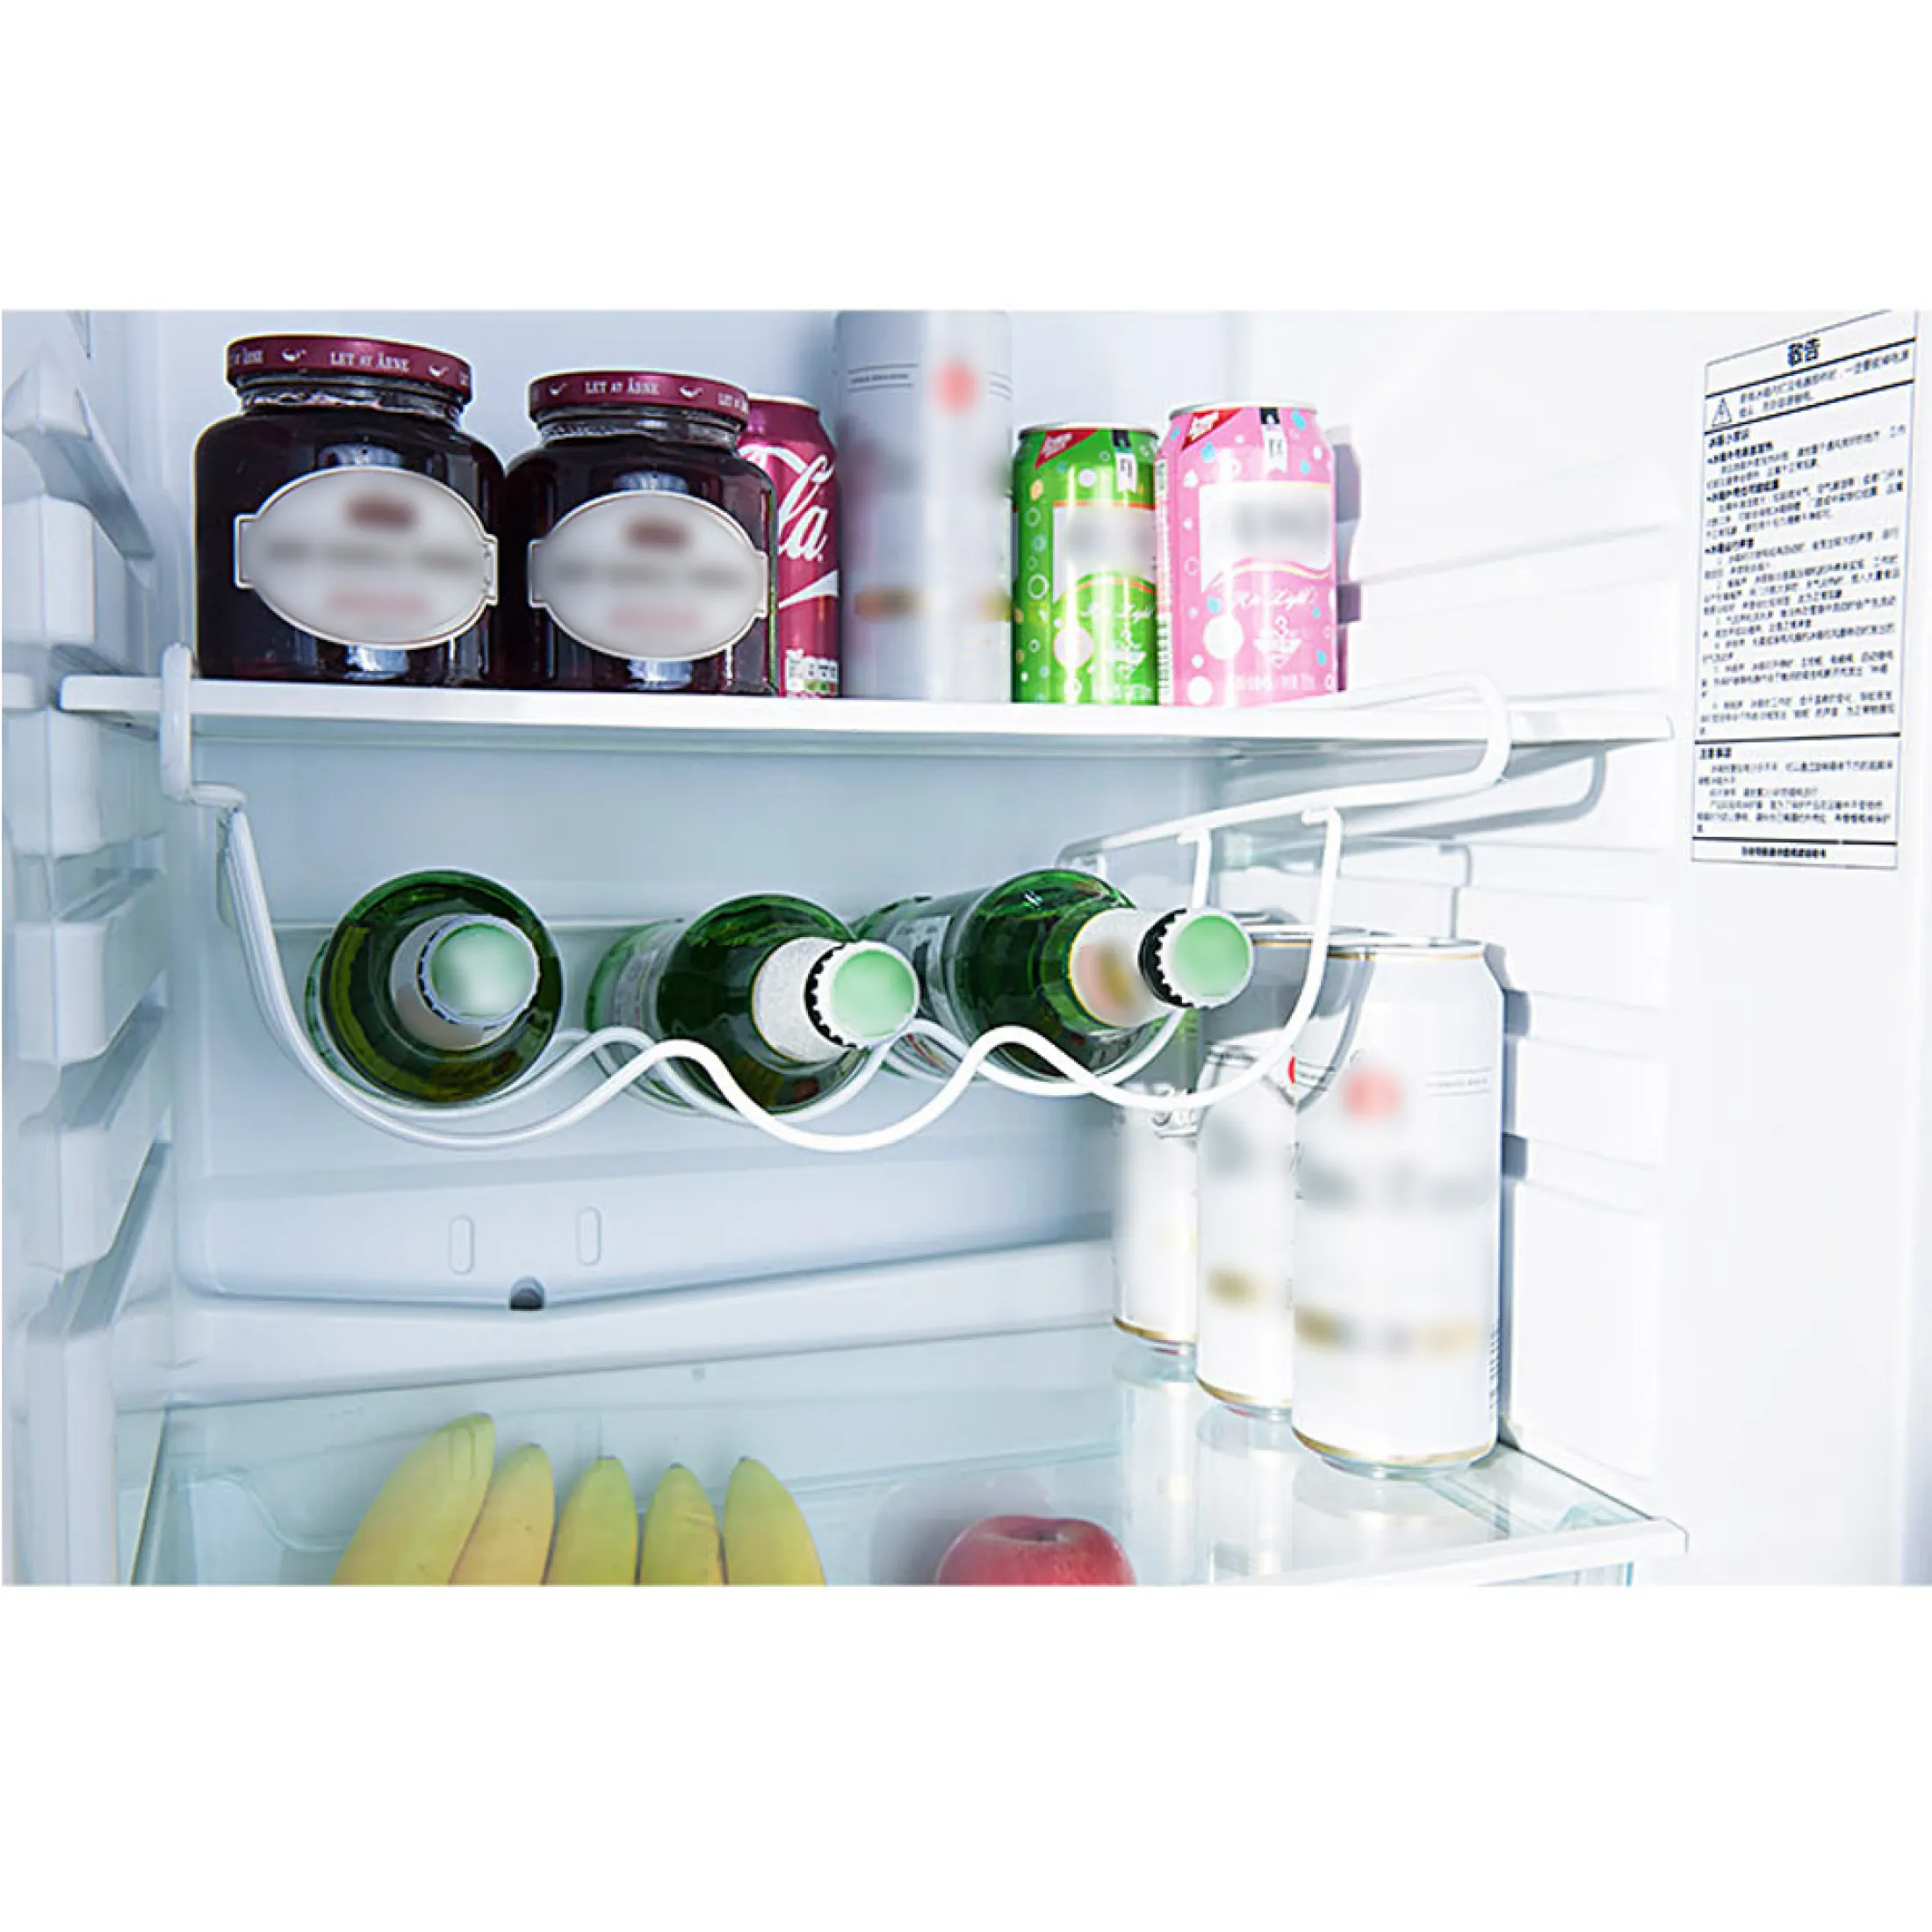 Wrought Iron Refrigerator Beer Bottle, Beer Storage Shelves